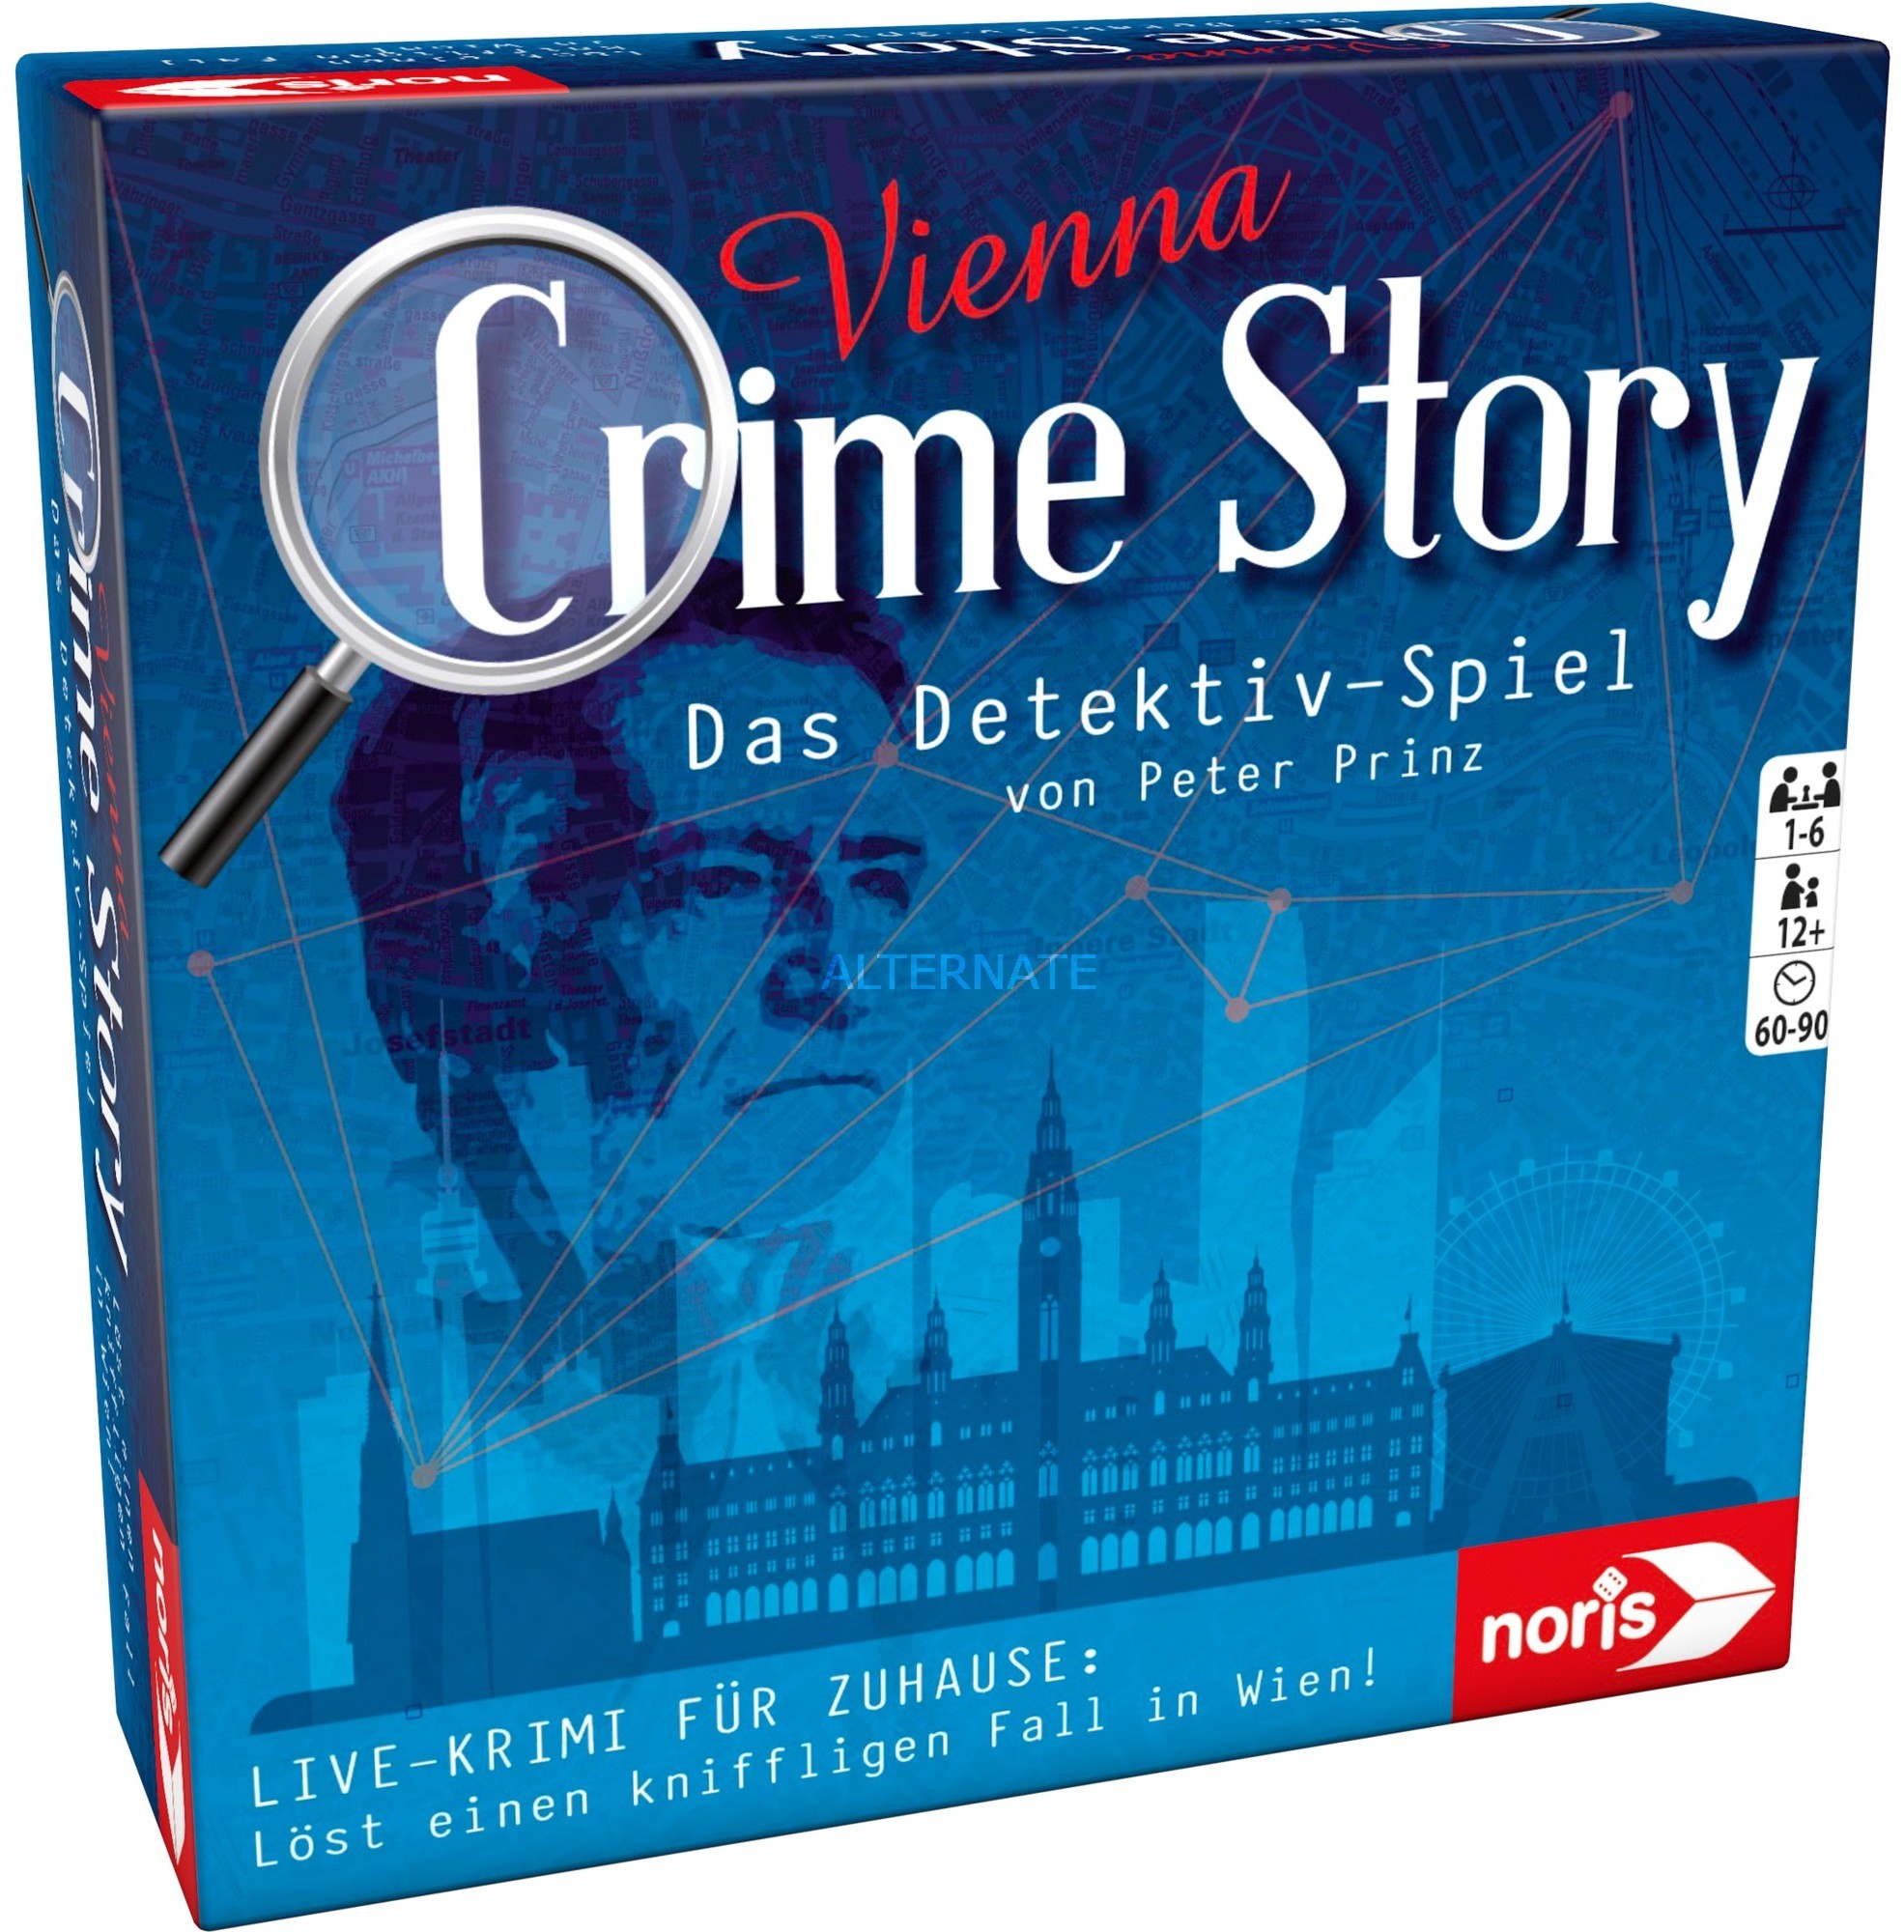 Noris Crime Story - Vienna Dorośli i dzieci